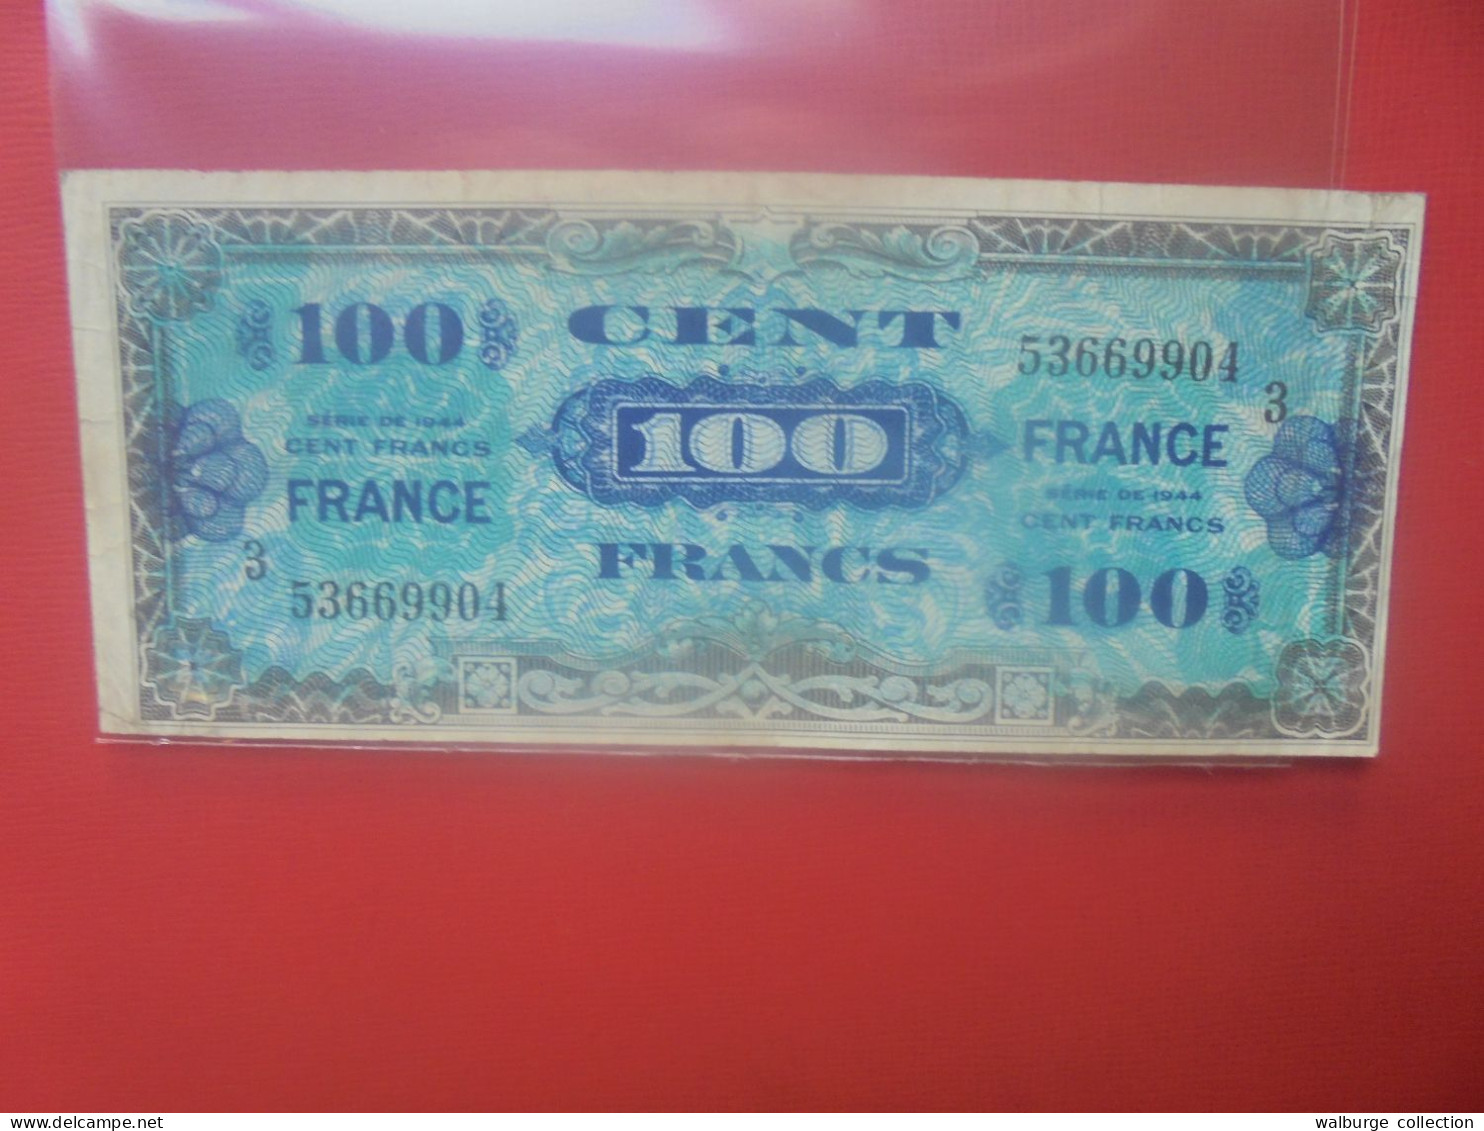 FRANCE 100 FRANCS 1945 Circuler - 1945 Verso France